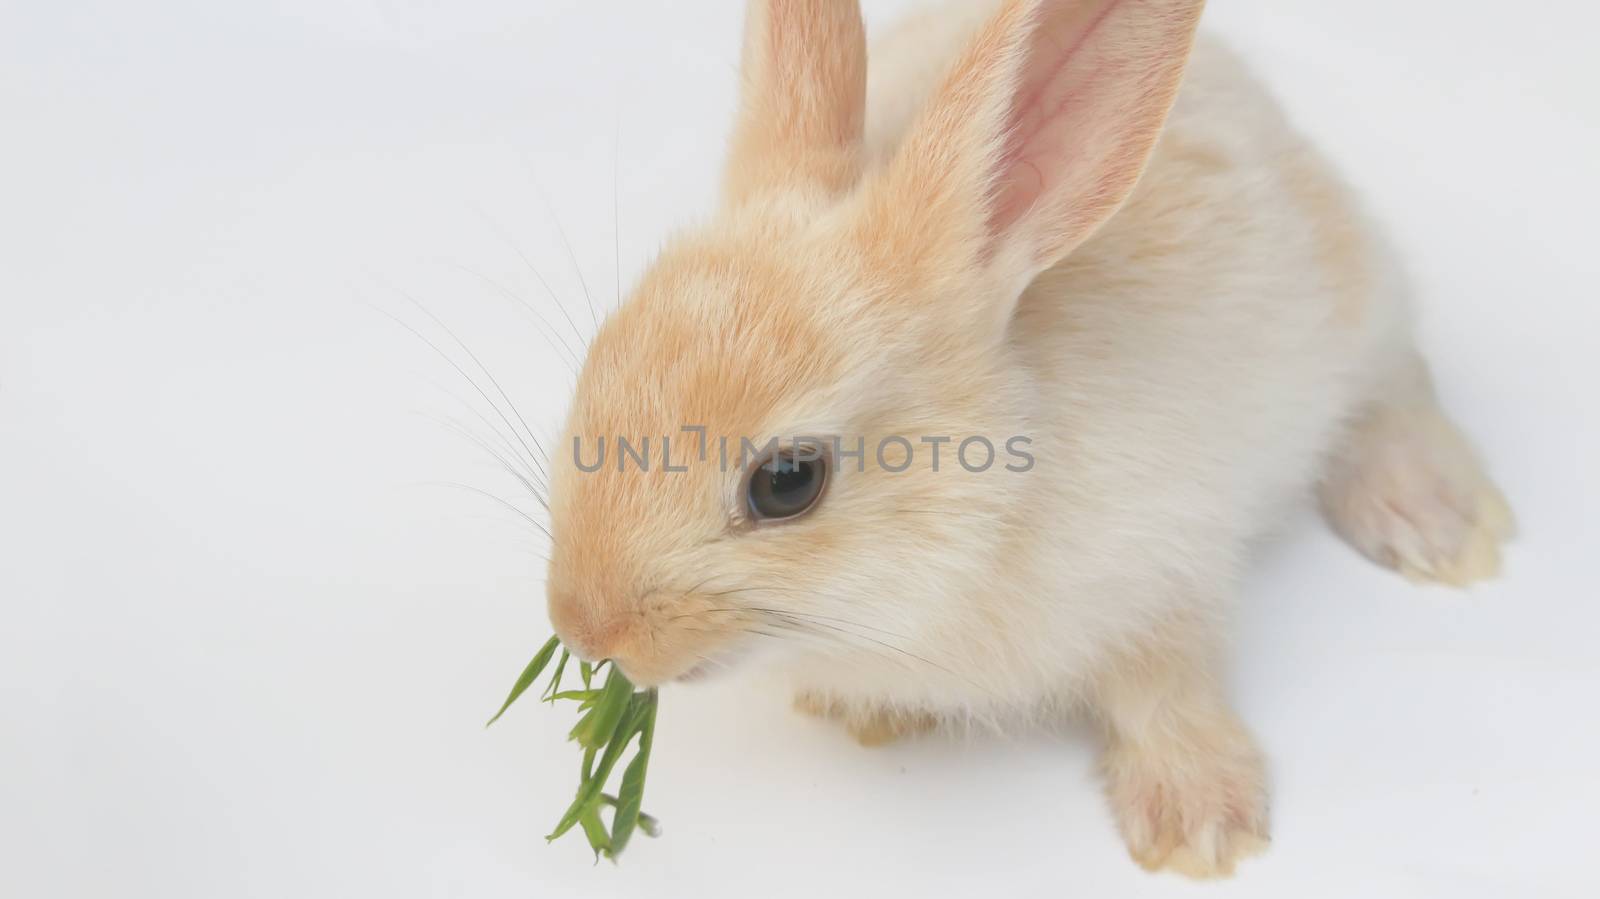 
rabbit on a white background